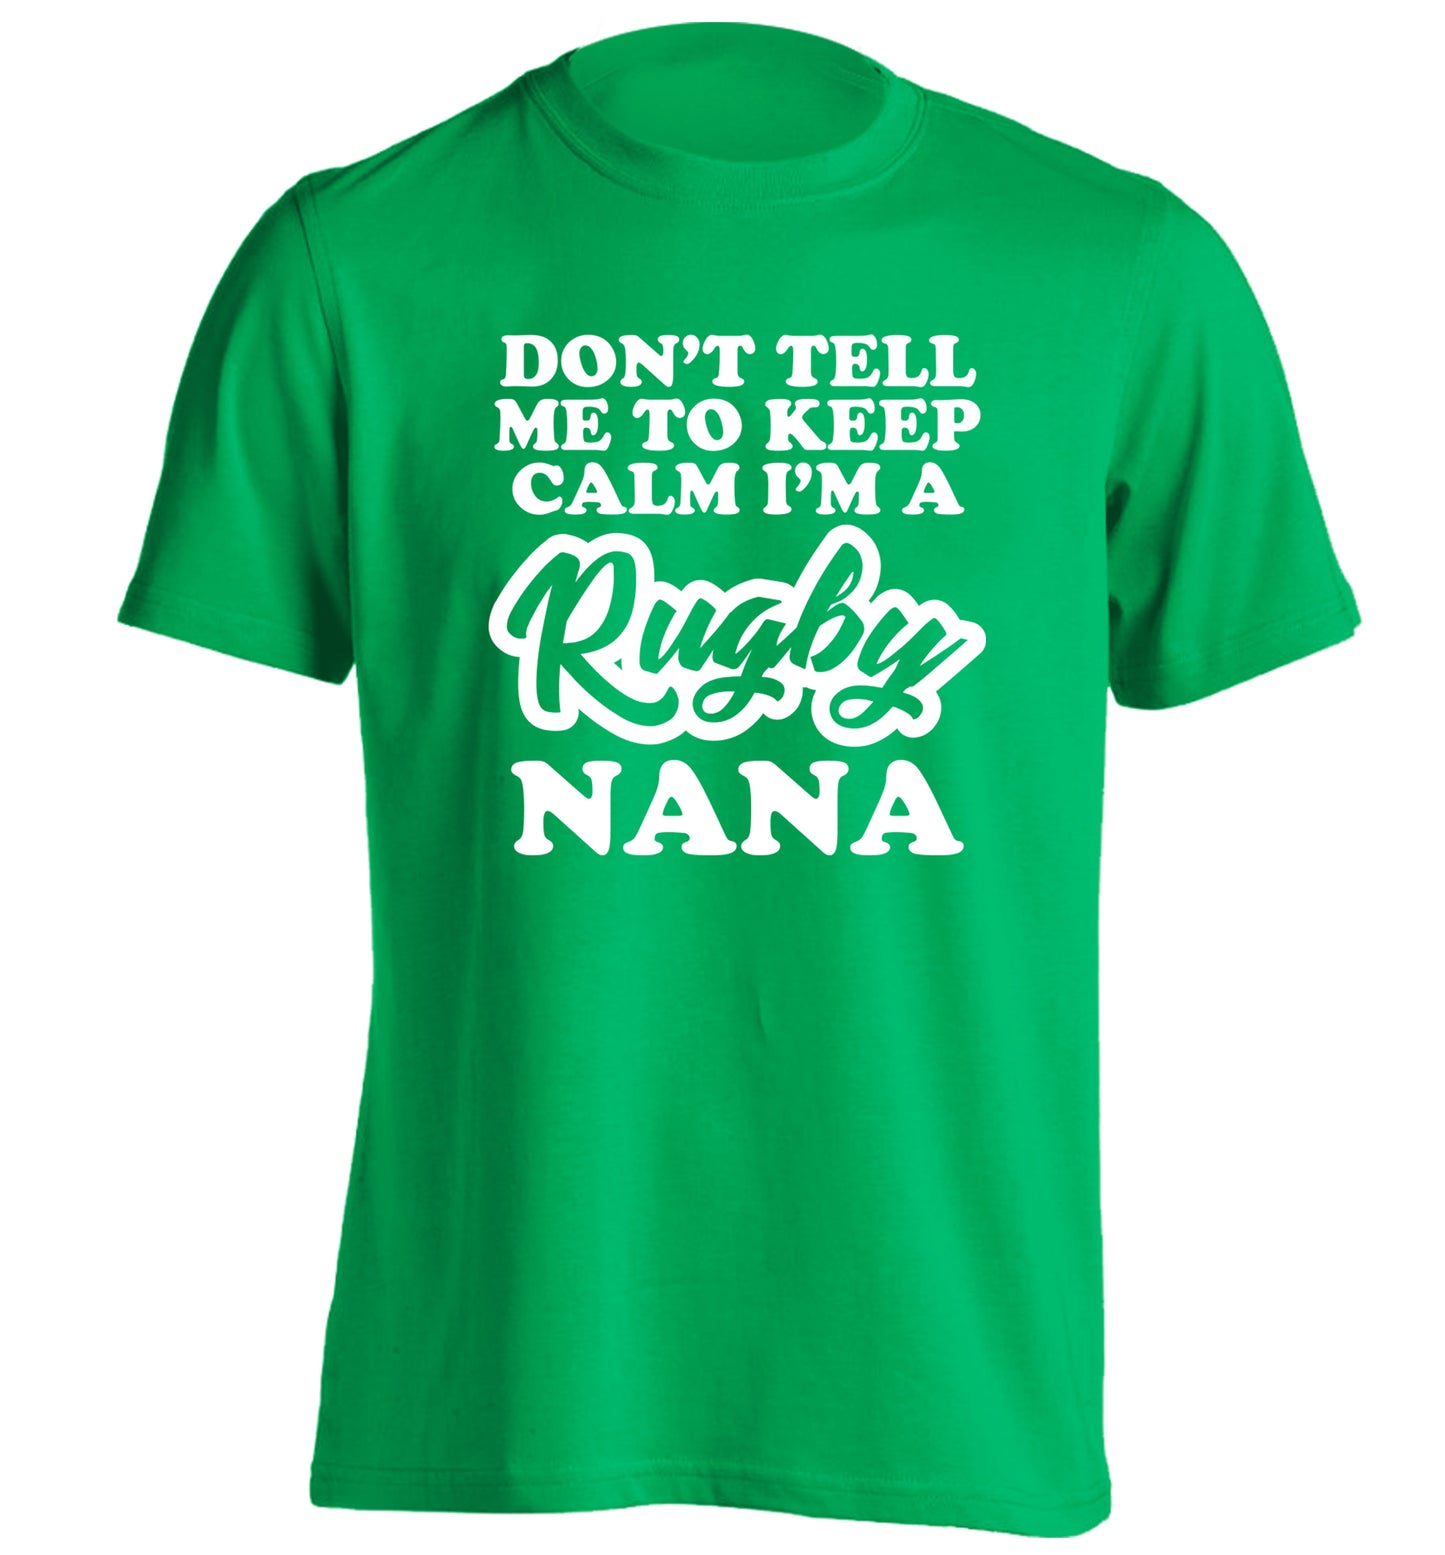 Don't tell me to keep calm I'm a rugby nana adults unisex green Tshirt 2XL